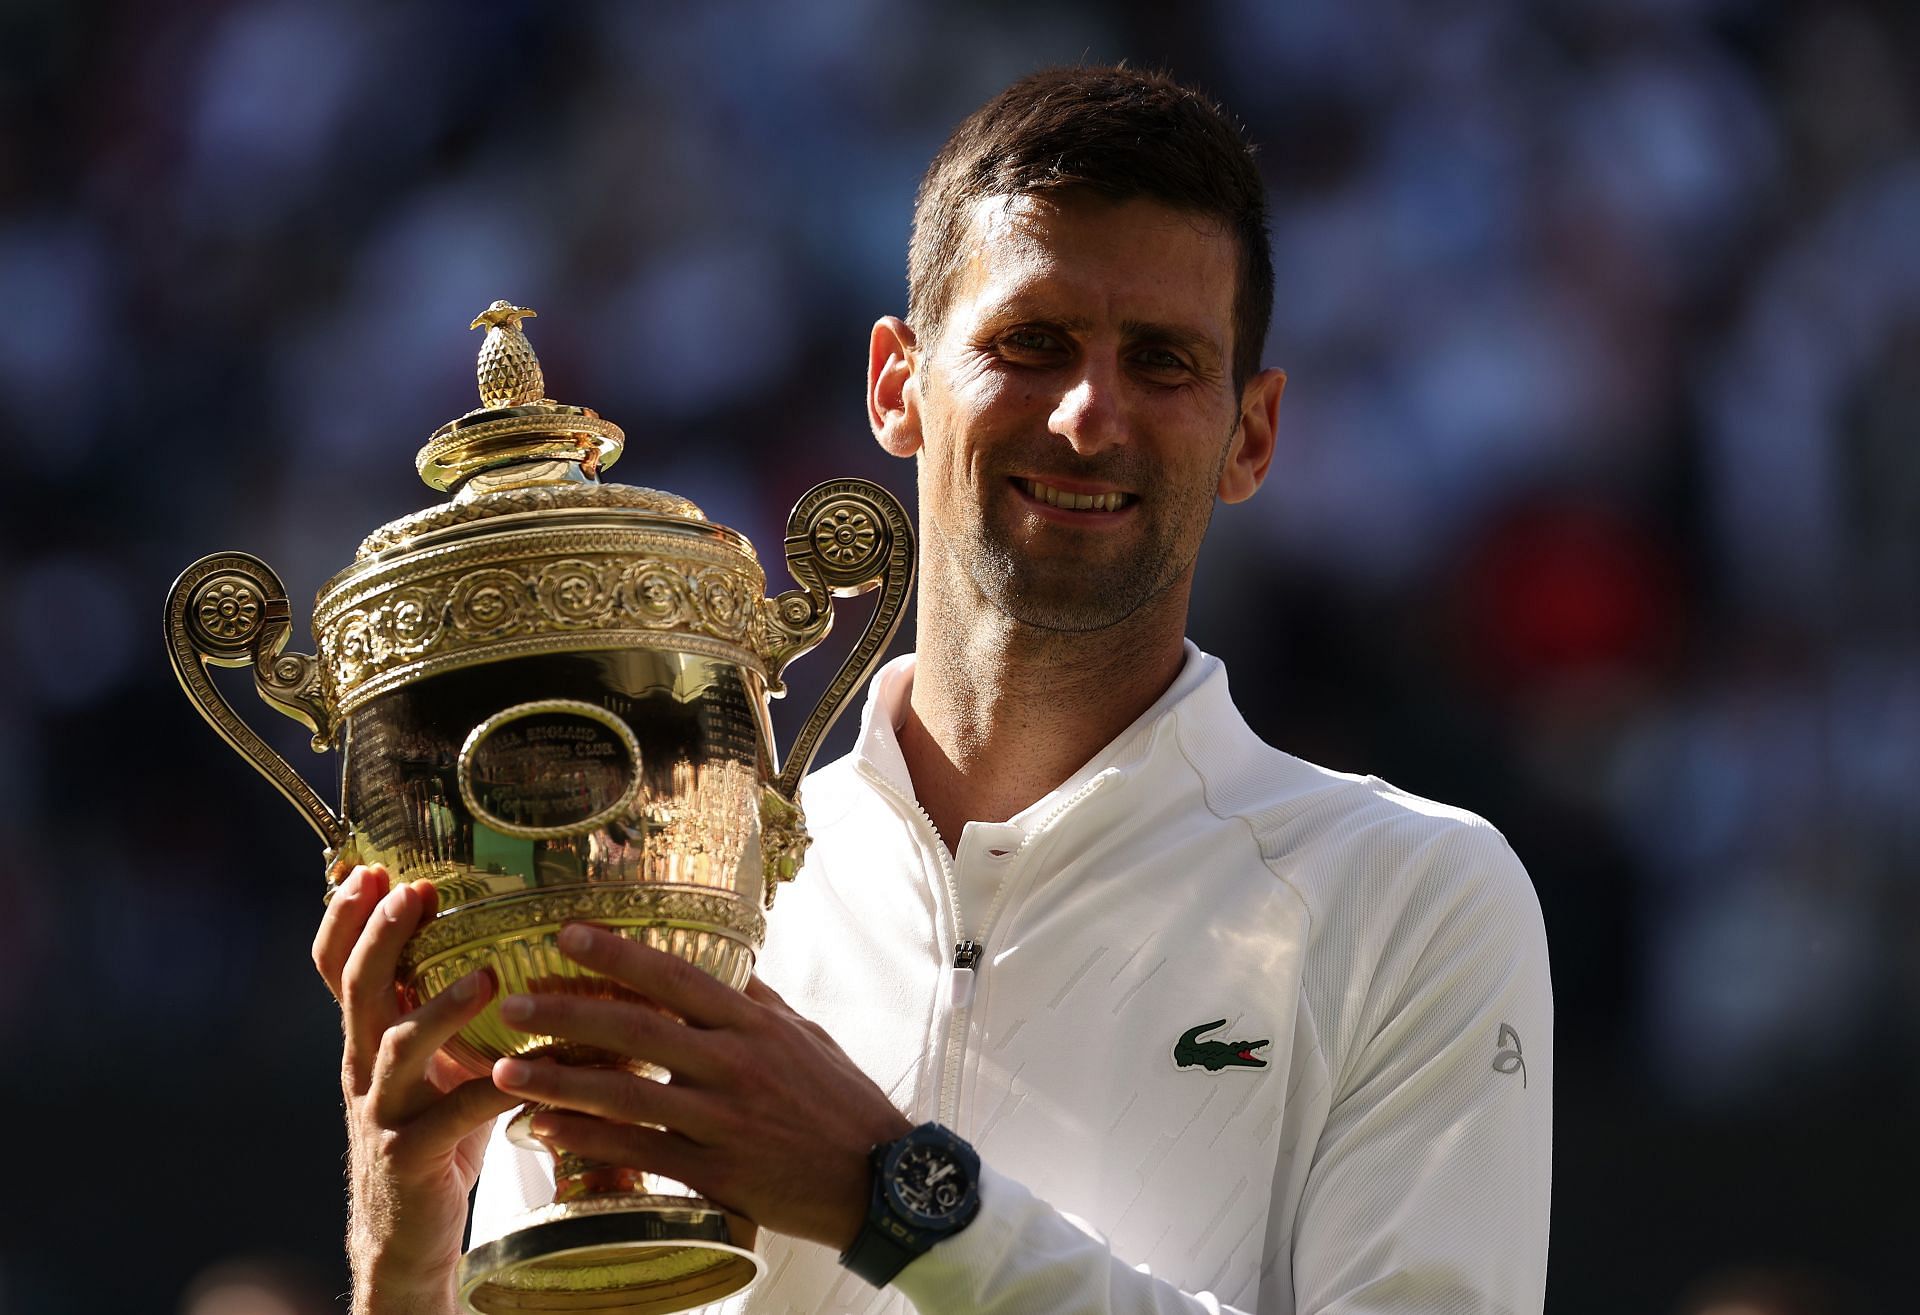 Novak Djokovic lifted his fourth consecutive Wimbledon title despite tough times in 2022